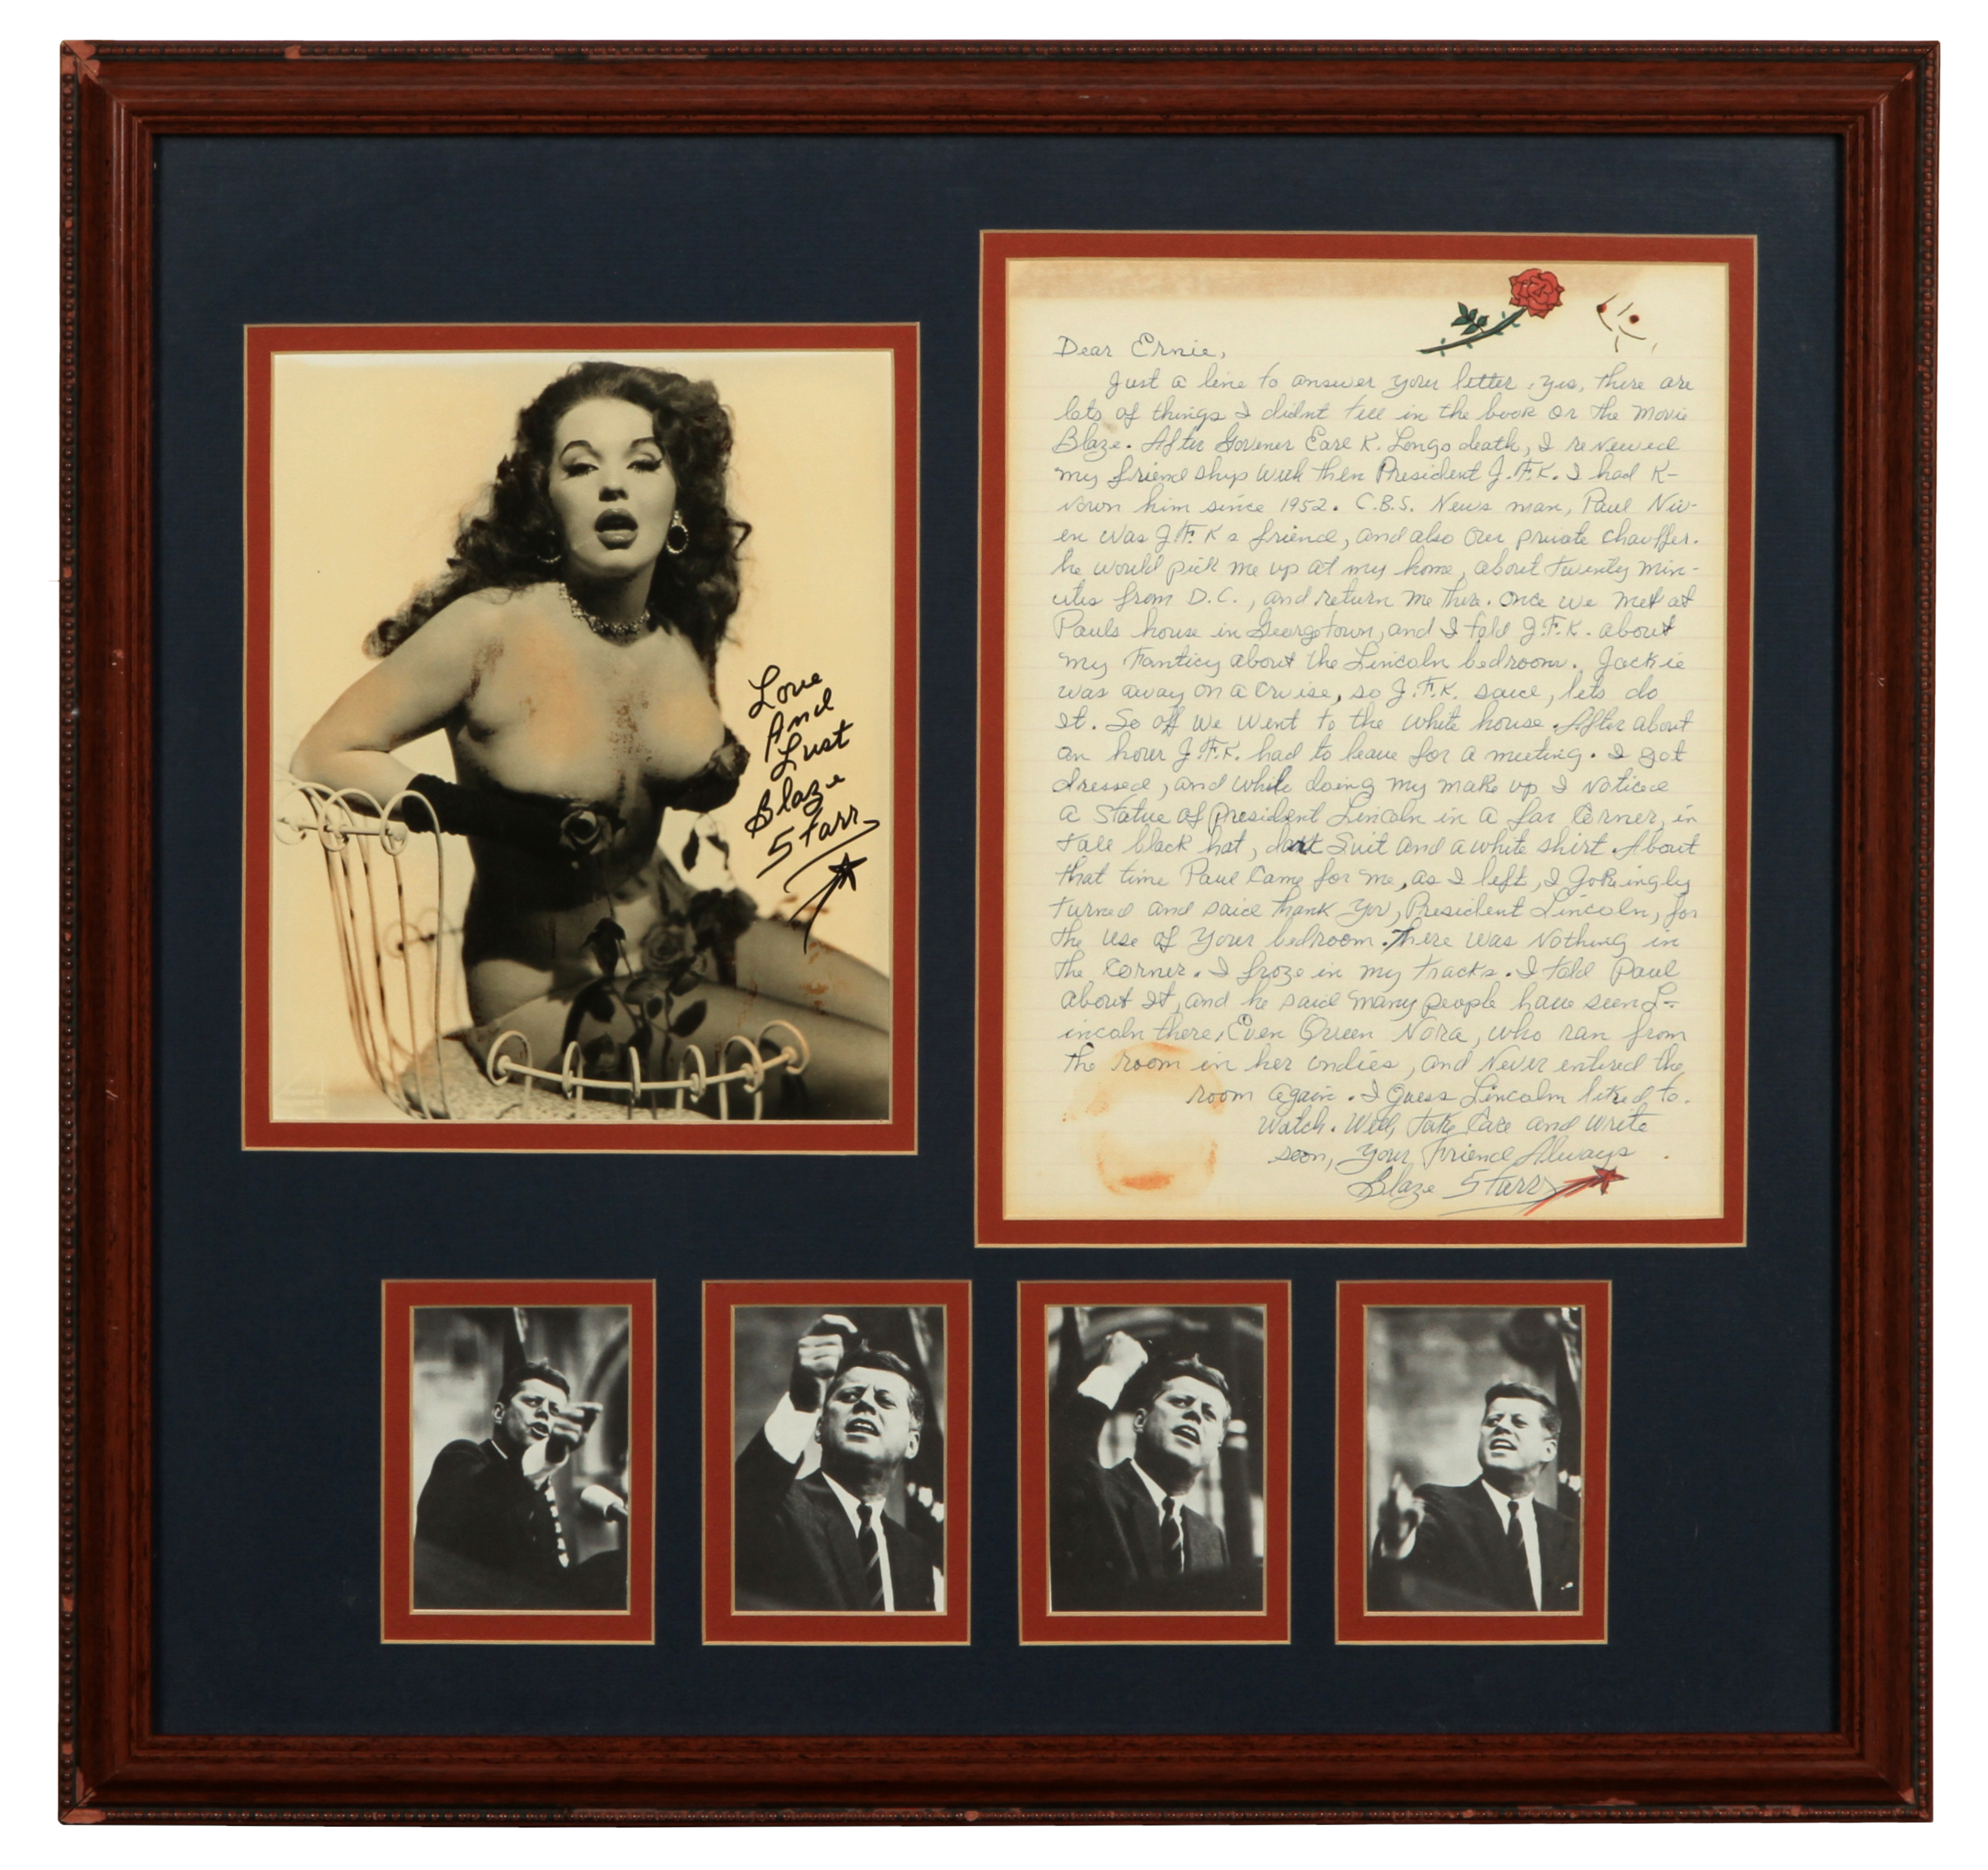 Blaze Starr Famous Burlesque Dancer Signed and Framed Photos and JFK Letter...